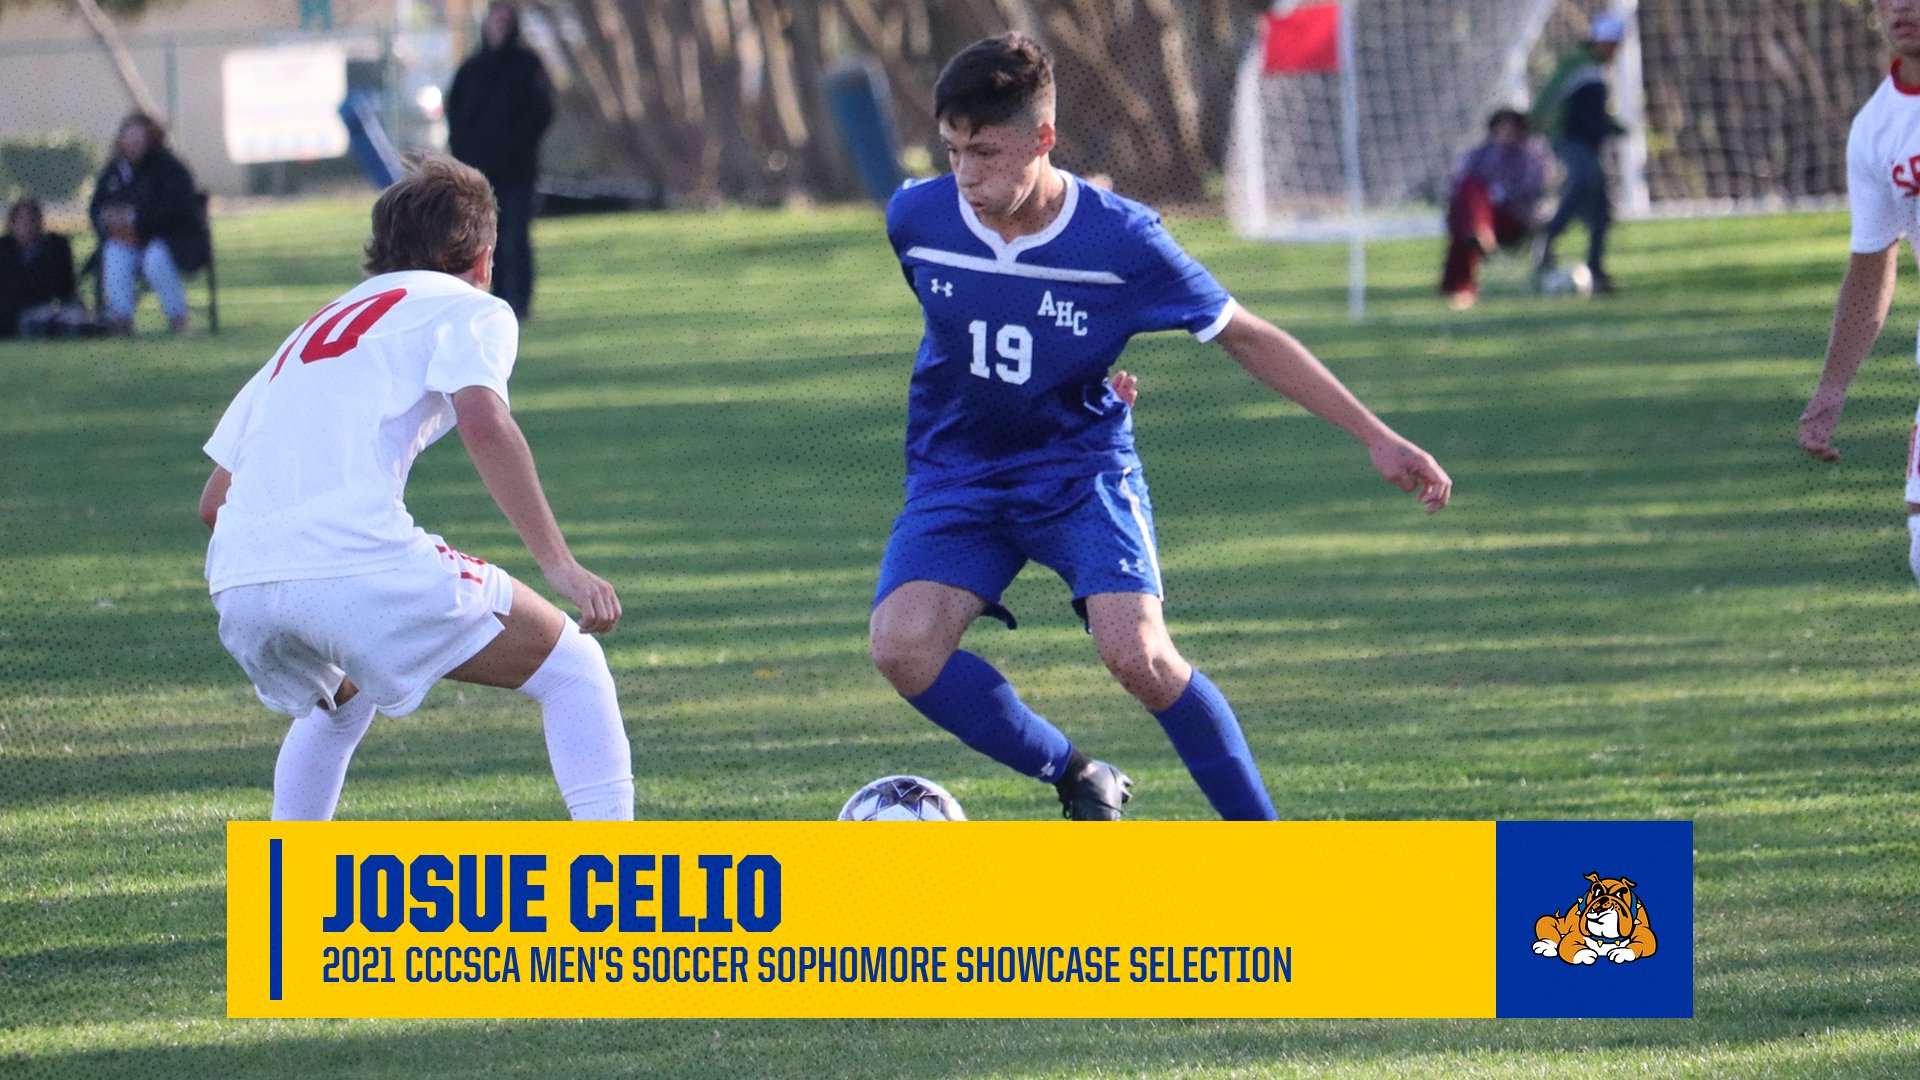 Josue Celio to Represent AHC at 2021 CCCSCA Men's Soccer Sophomore Showcase